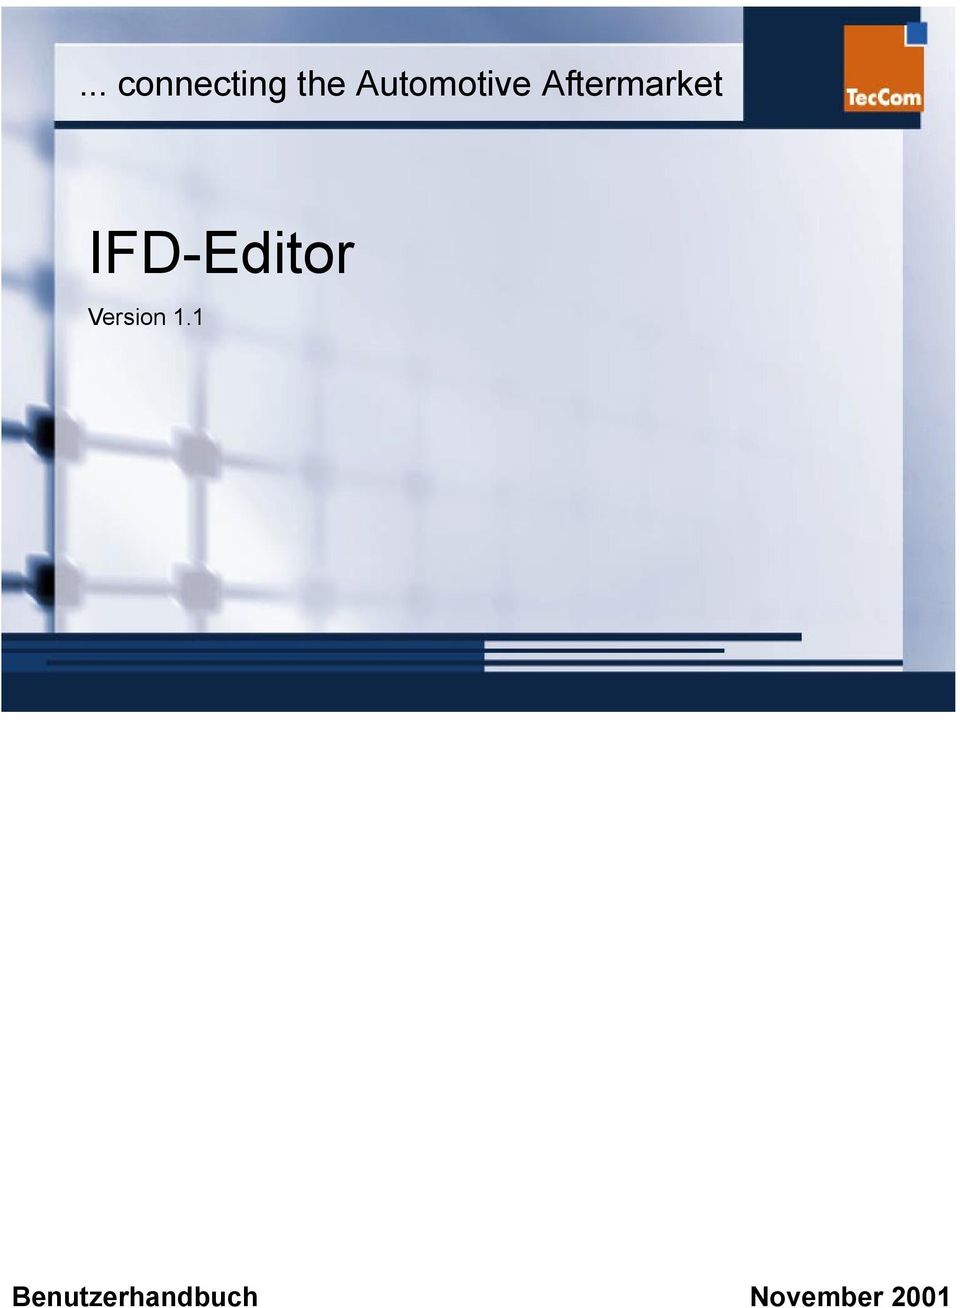 IFD-Editor Version 1.